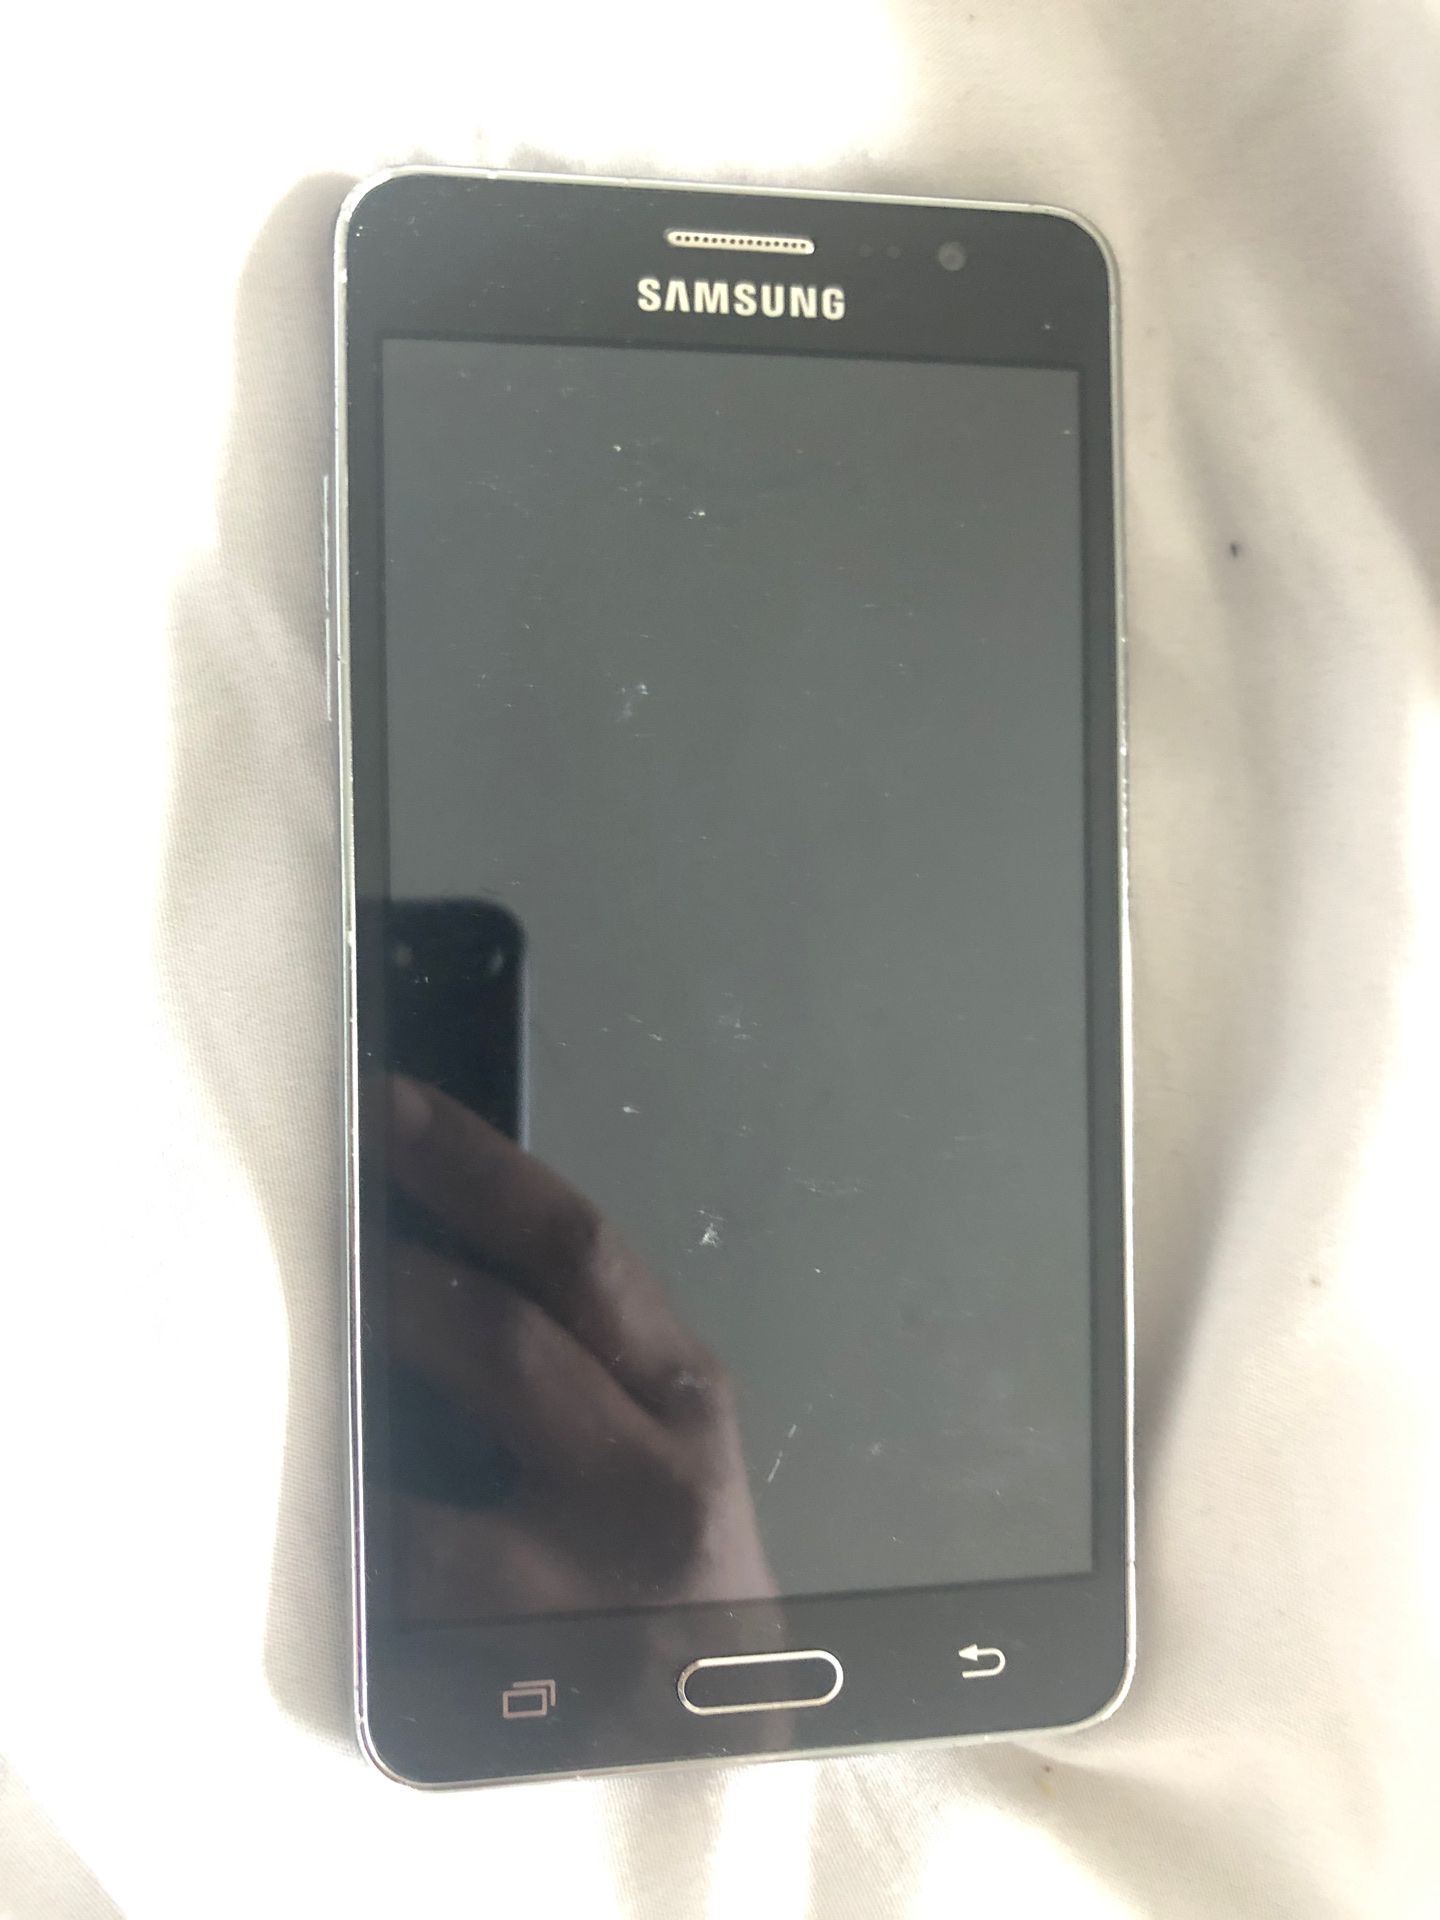 Samsung phone smart SM-G550T